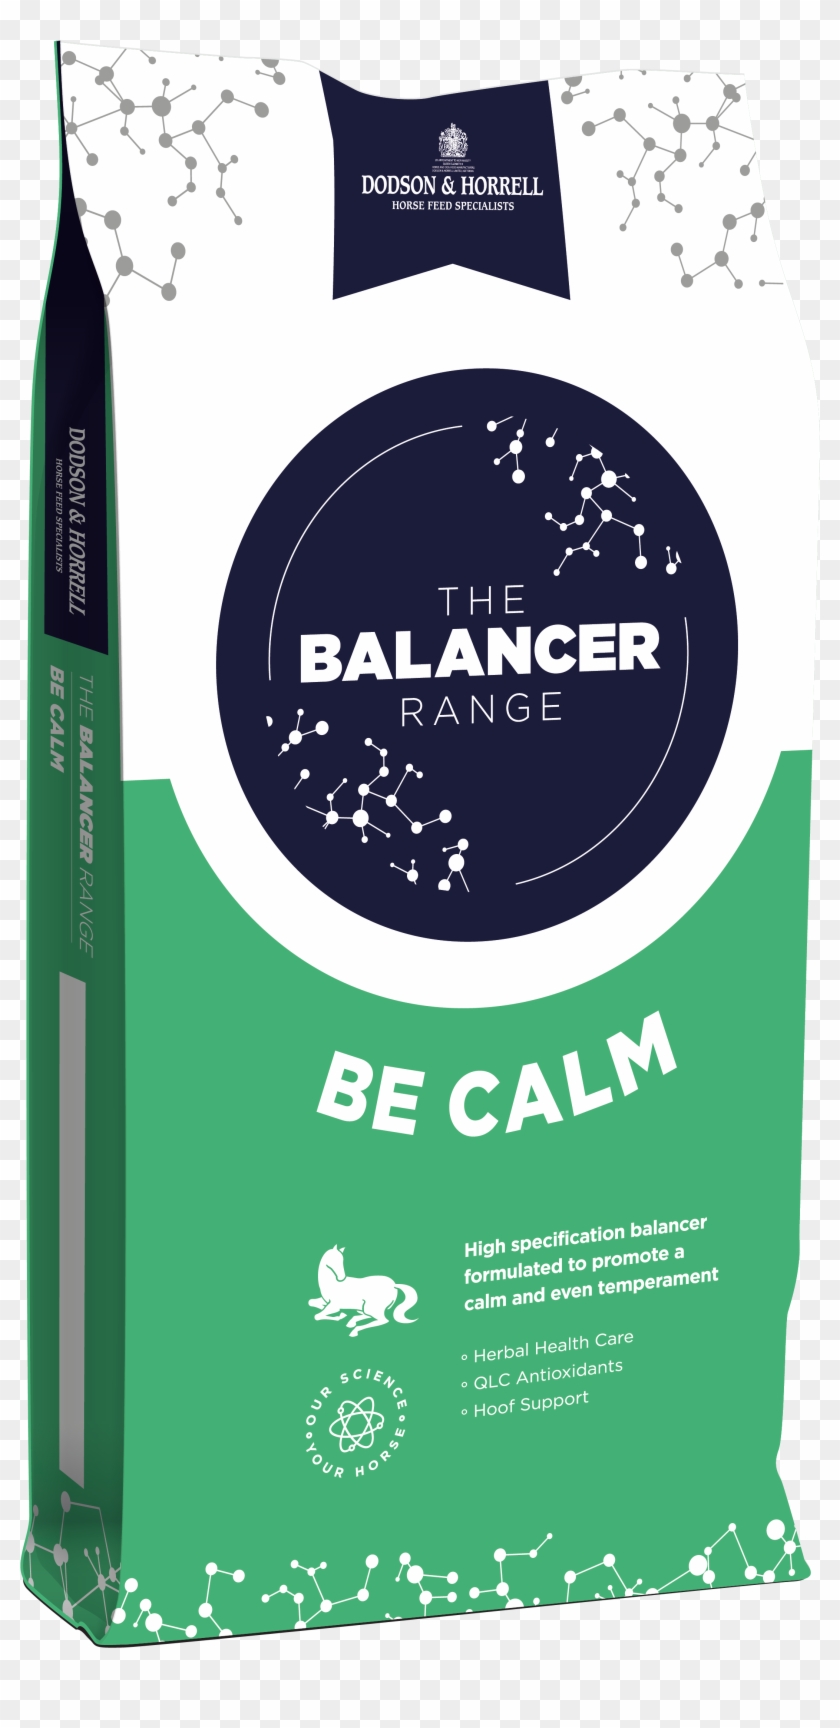 Be Calm Balancer - Dodson & Horrell Senior Support Balancer Clipart #4197217